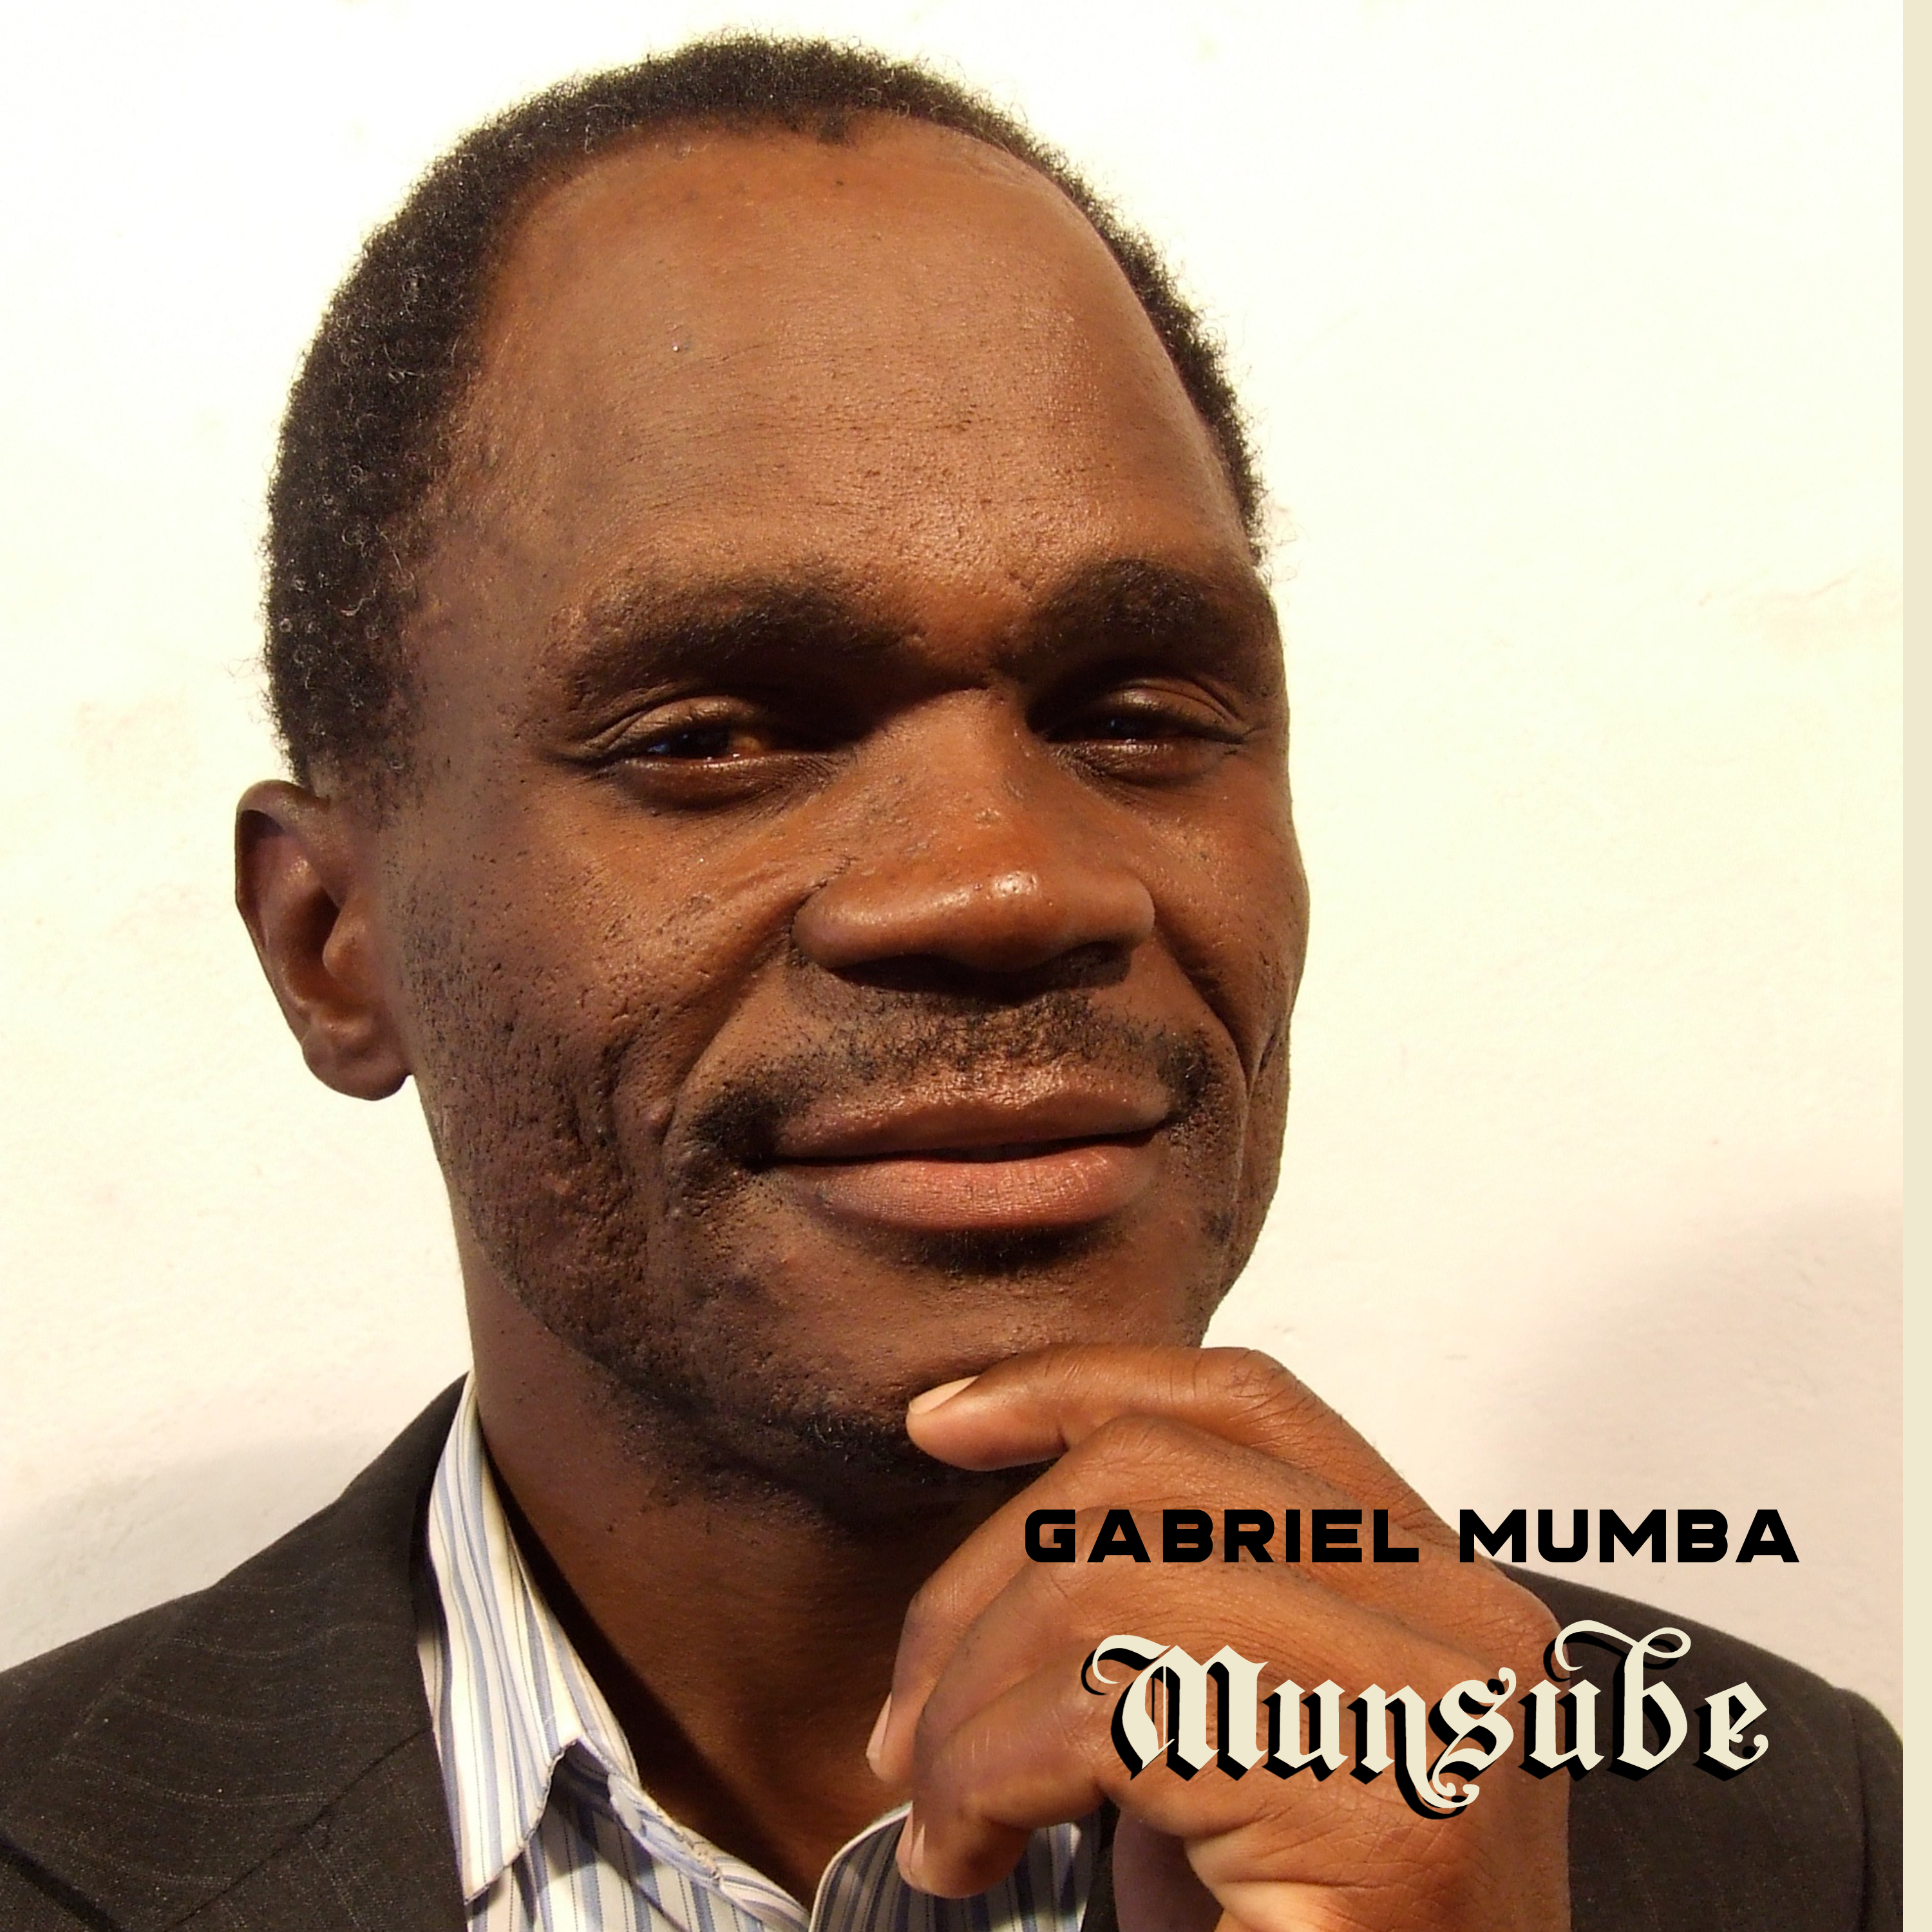 Munsube by Gabriel Mumba Mfumu | Album